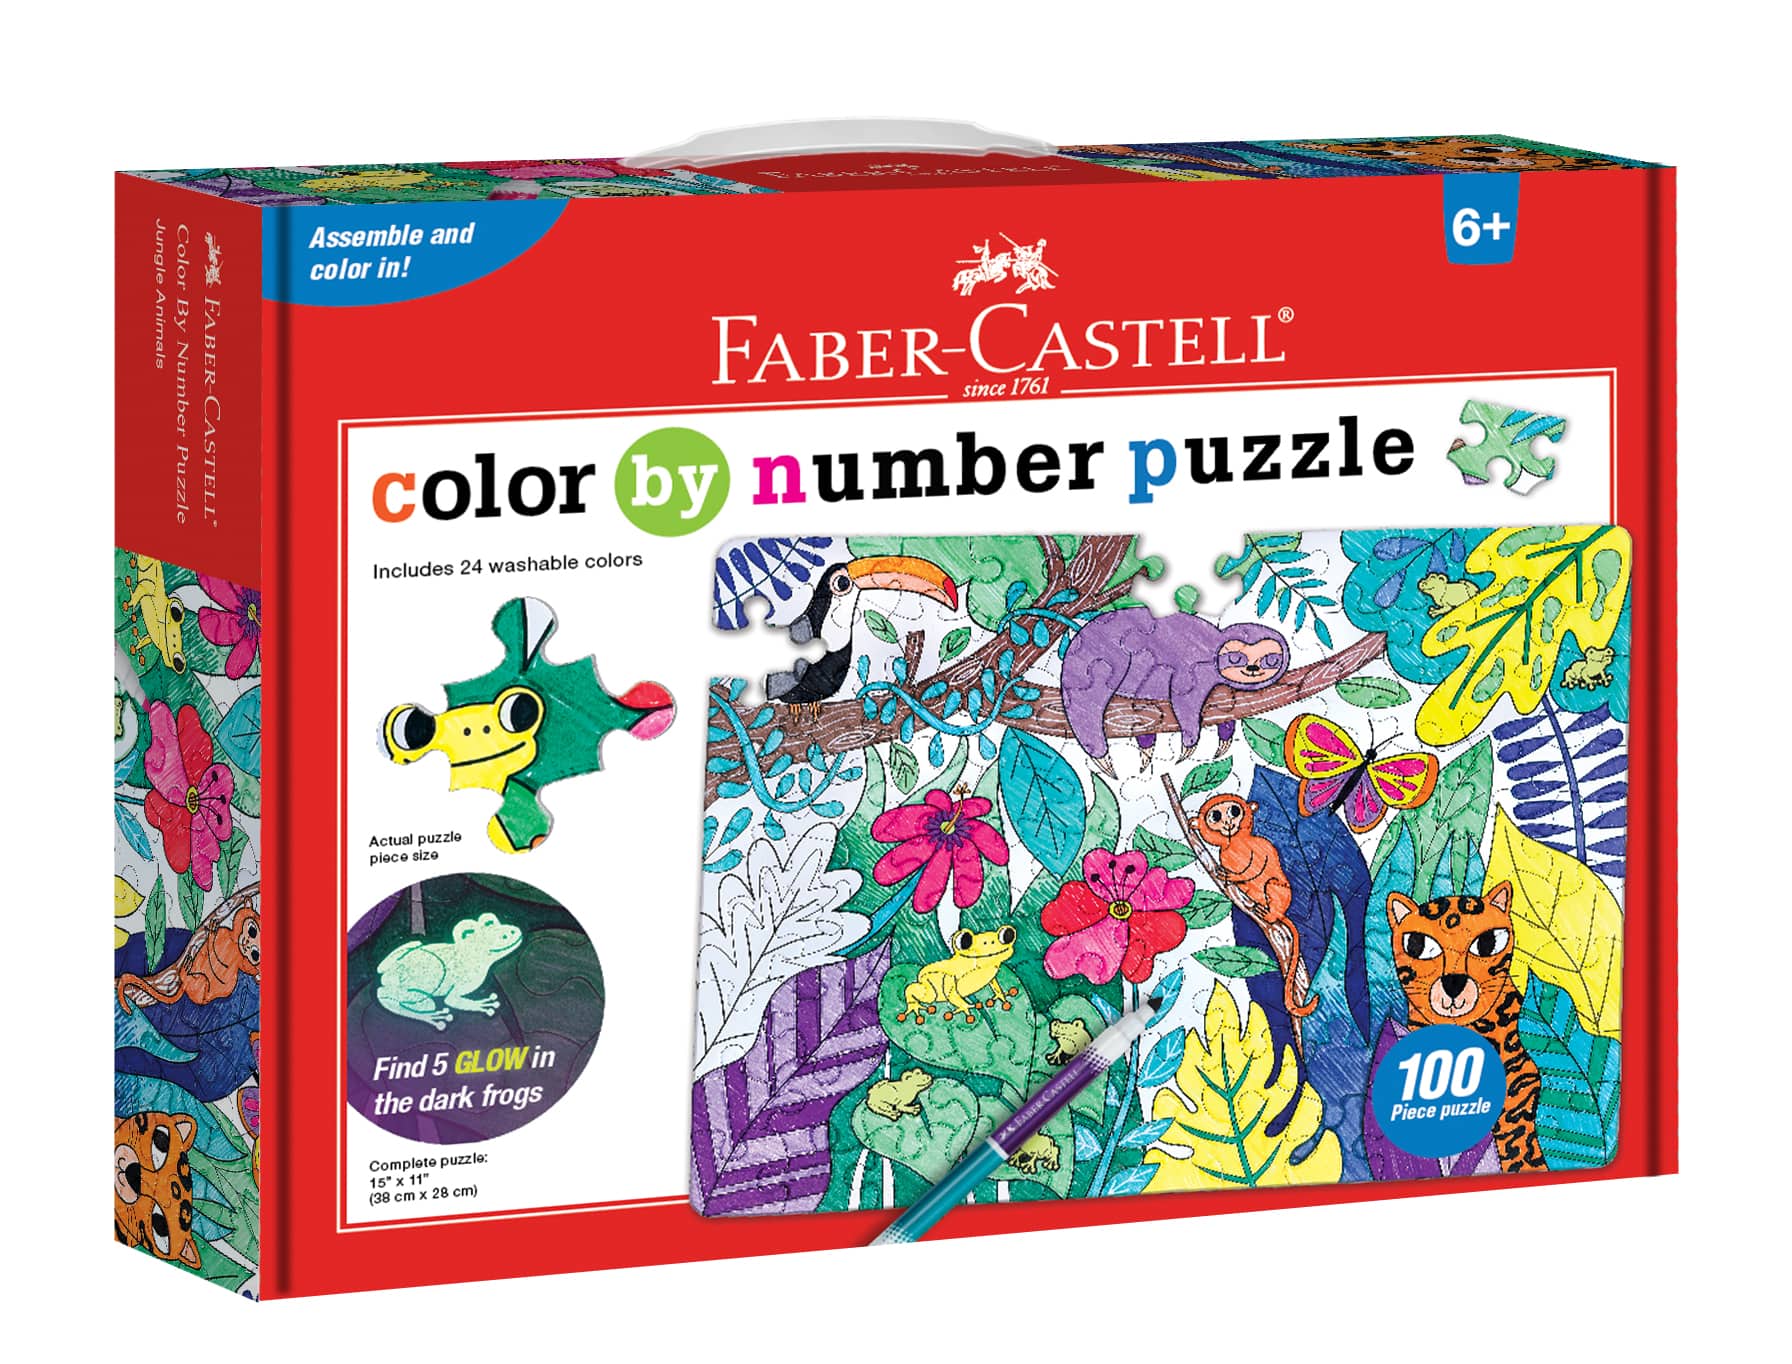 Faber-Castell Children Colour Markers - 24 pcs » Cheap Delivery